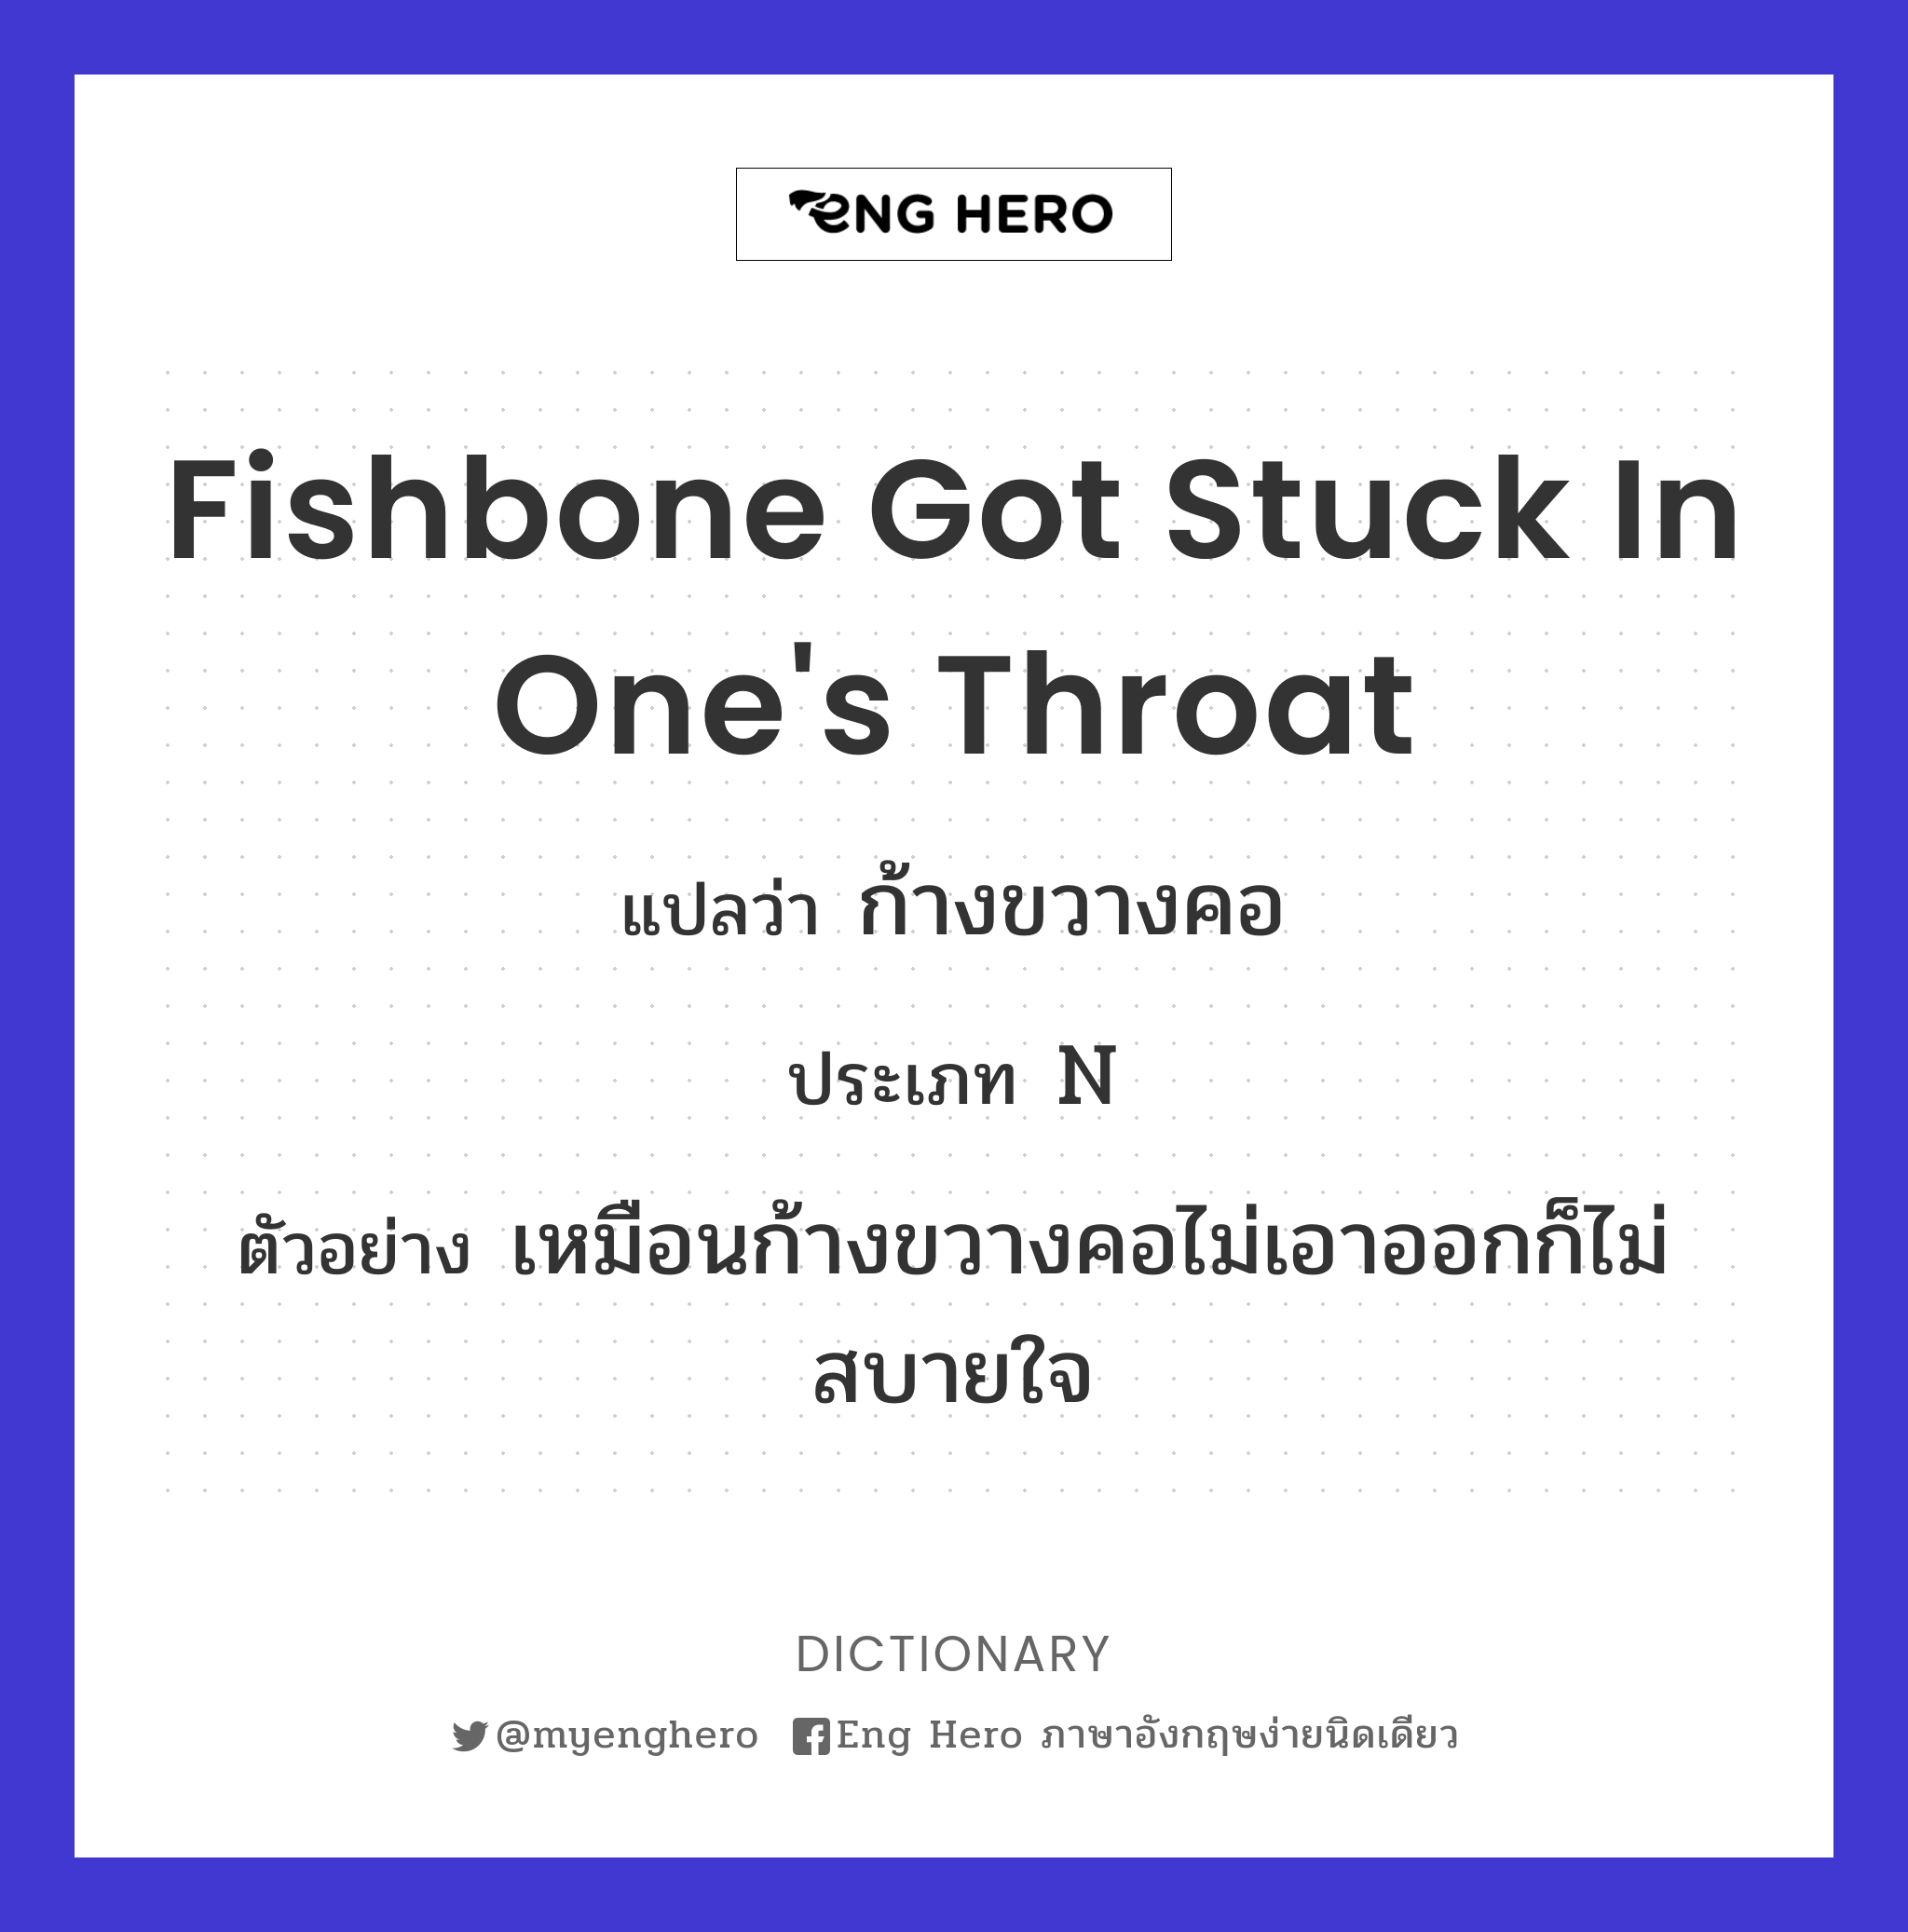 fishbone got stuck in one's throat